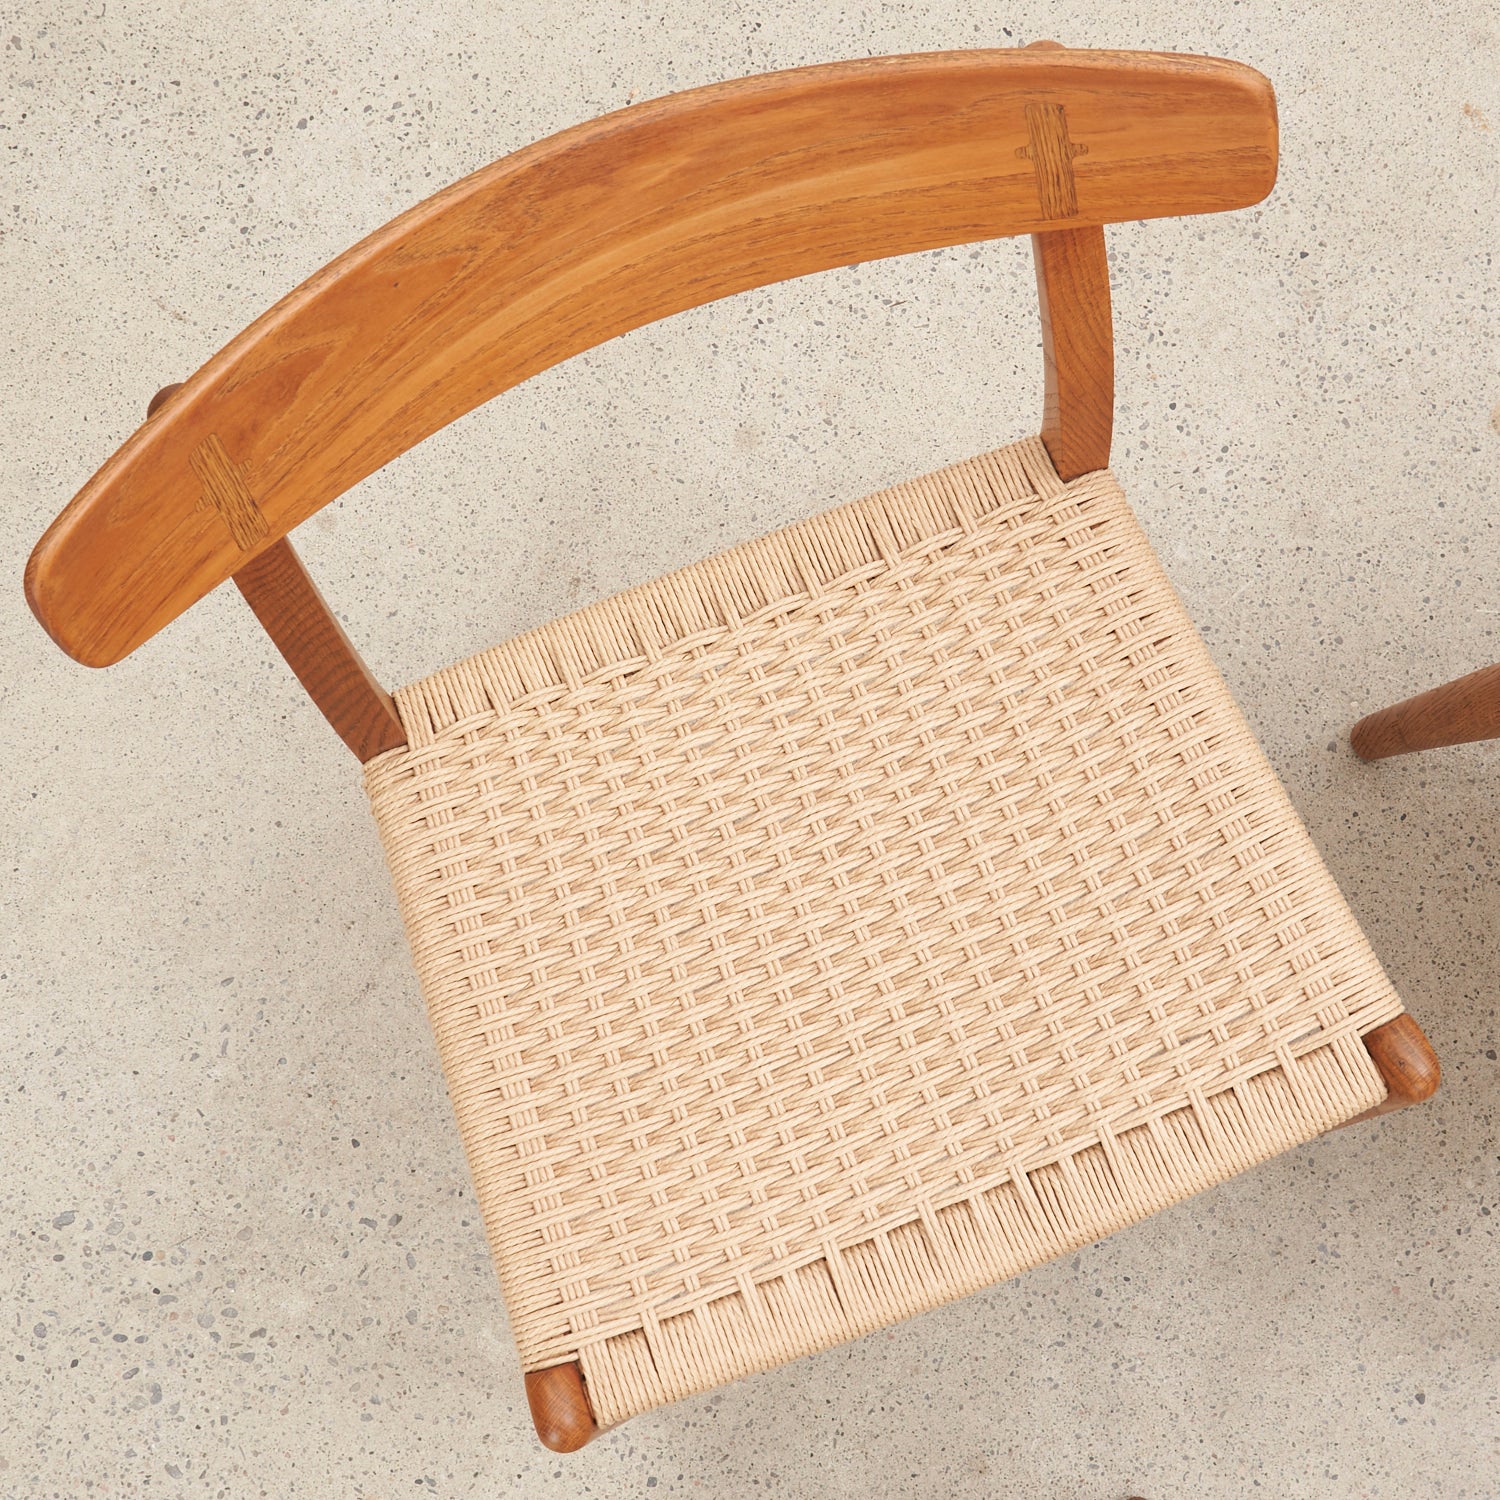 Set of 4 Oak 'CH23' Dining Chairs by Hans Wegner for Carl Hansen & Son